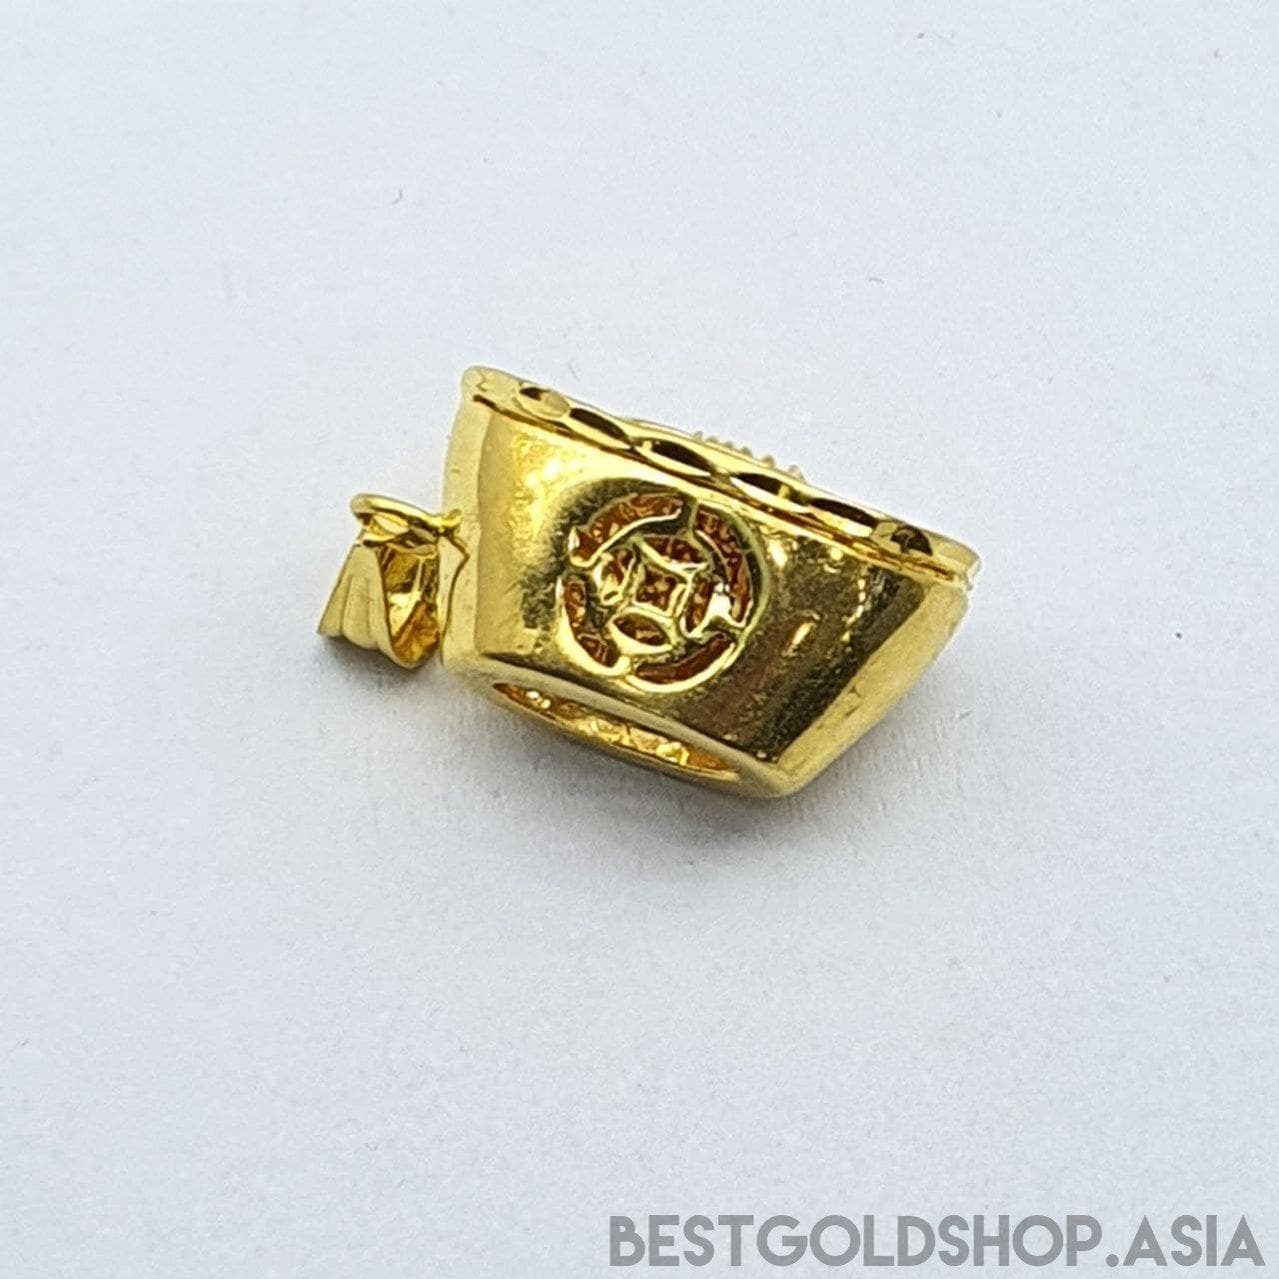 22k / 916 Gold abacus ingot / yuan bao pendant-916 gold-Best Gold Shop